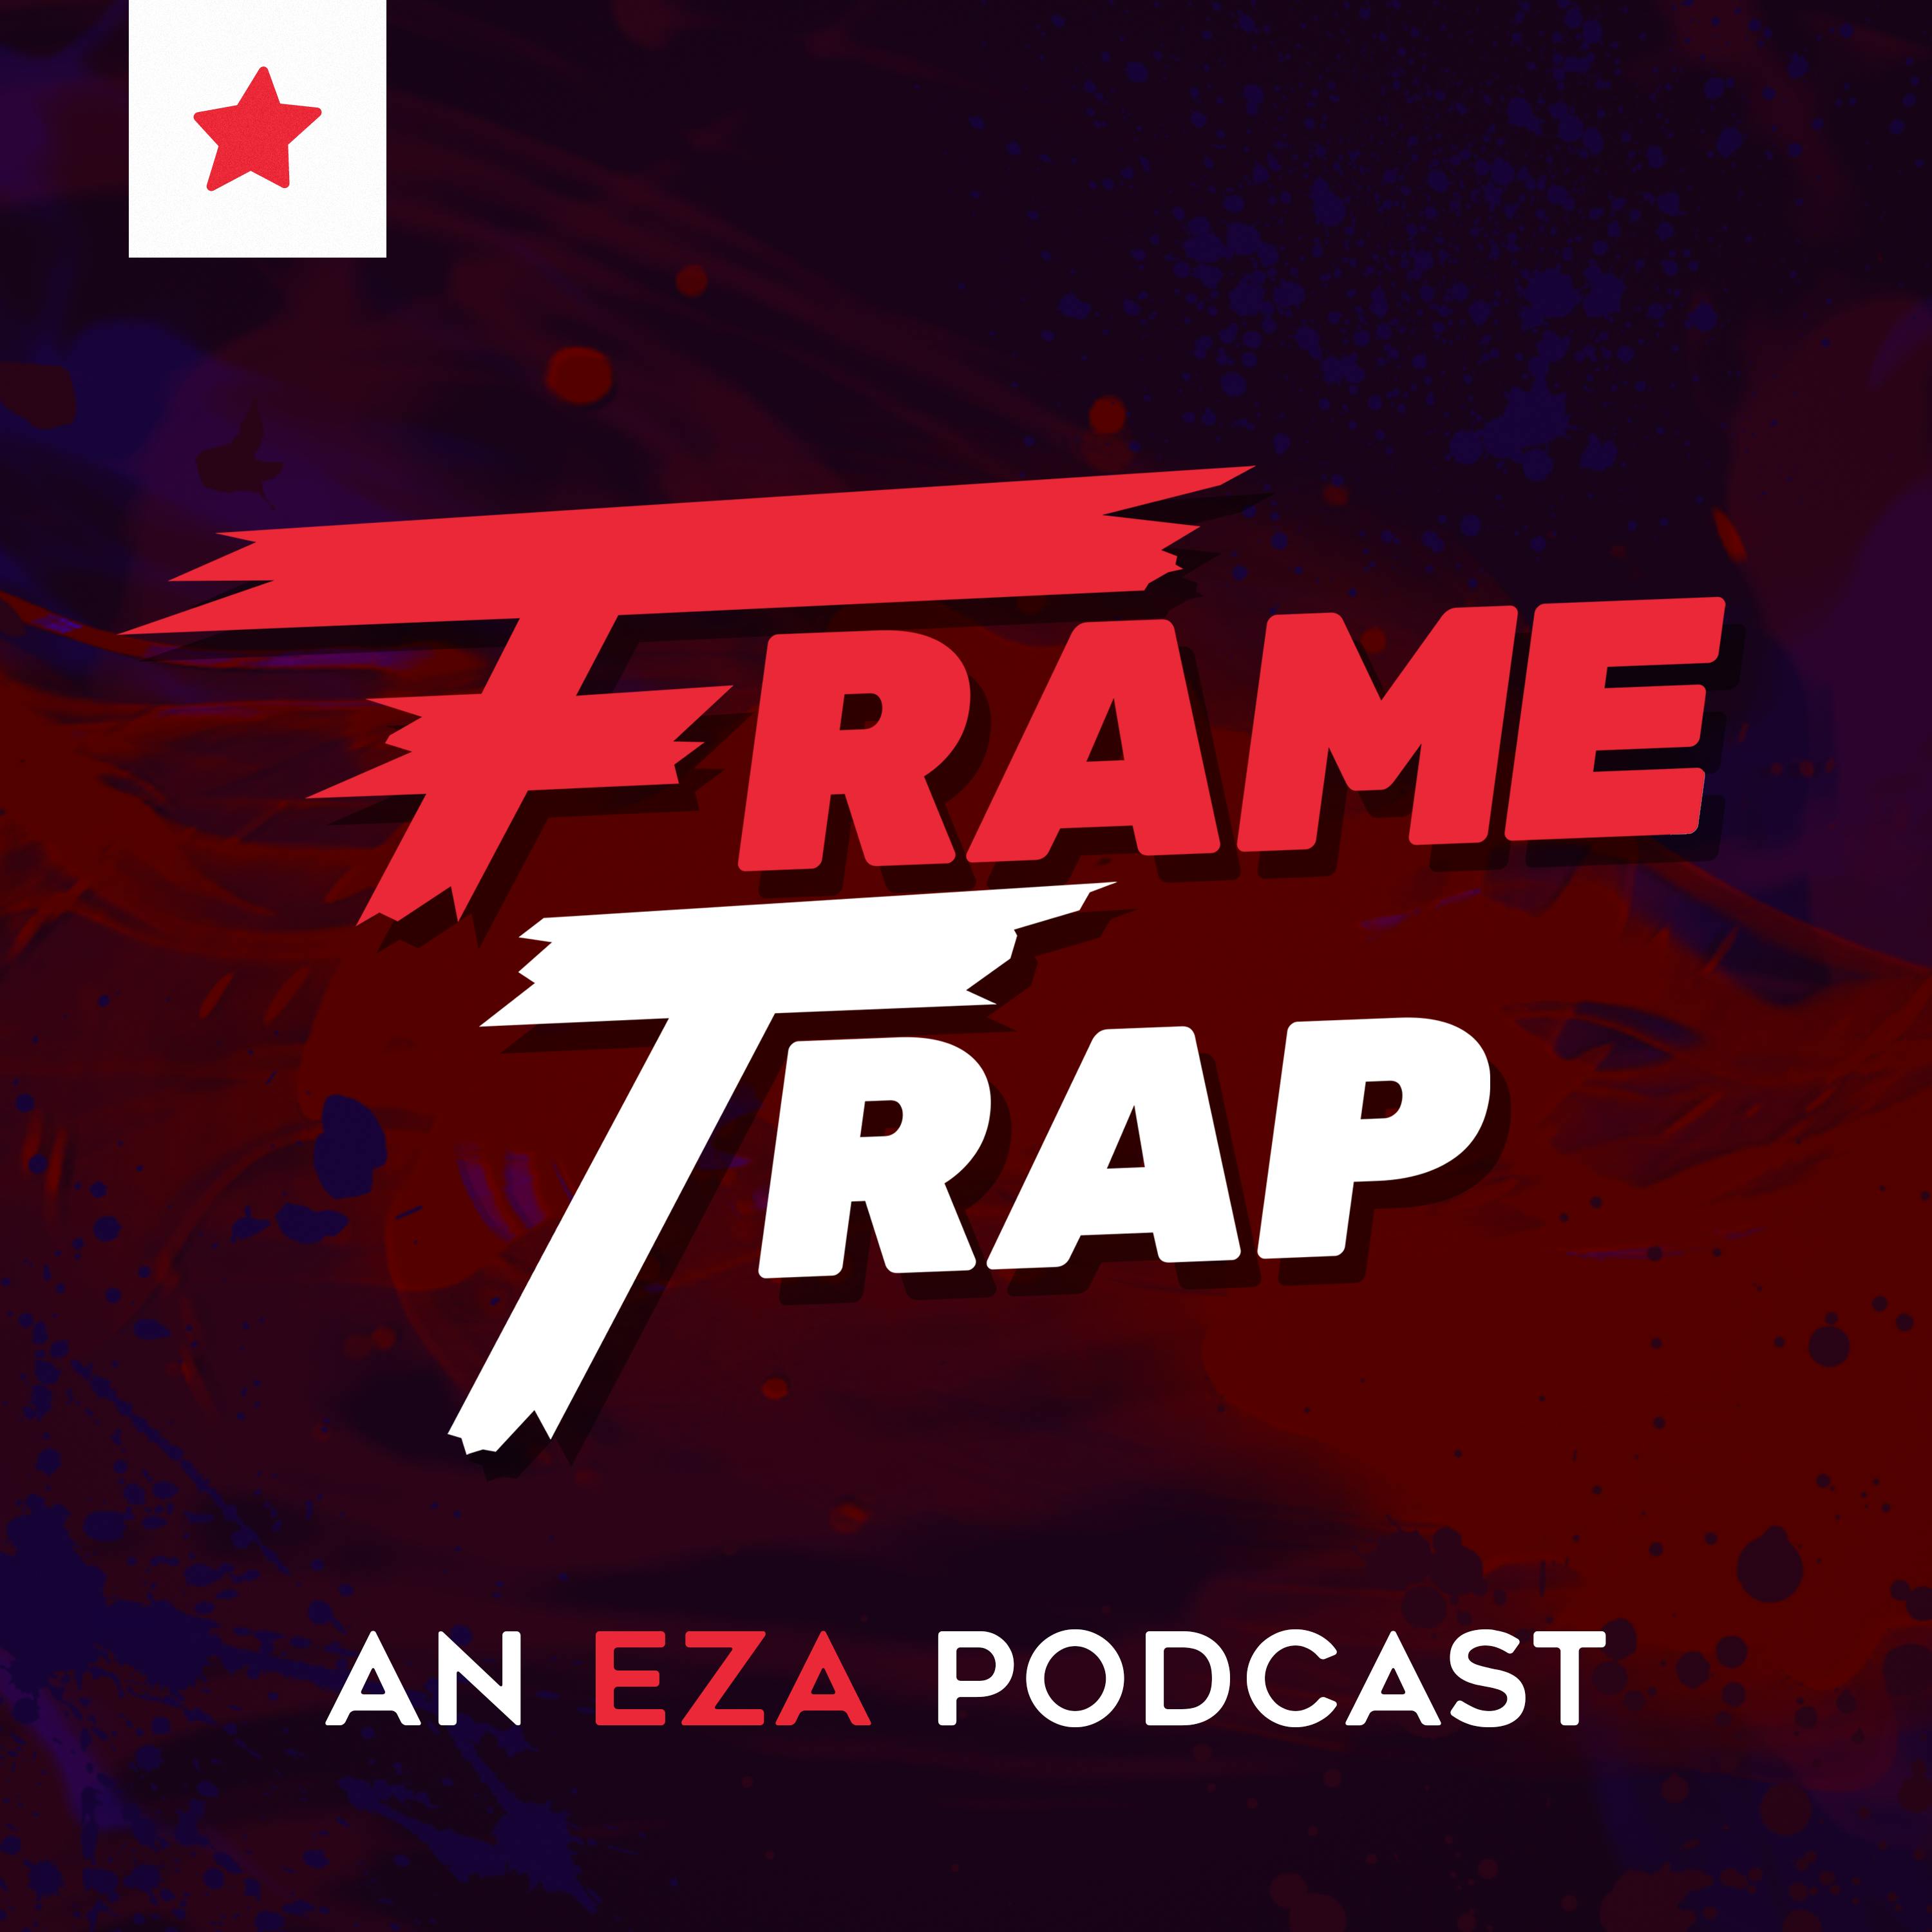 Frame Trap - Episode 174 